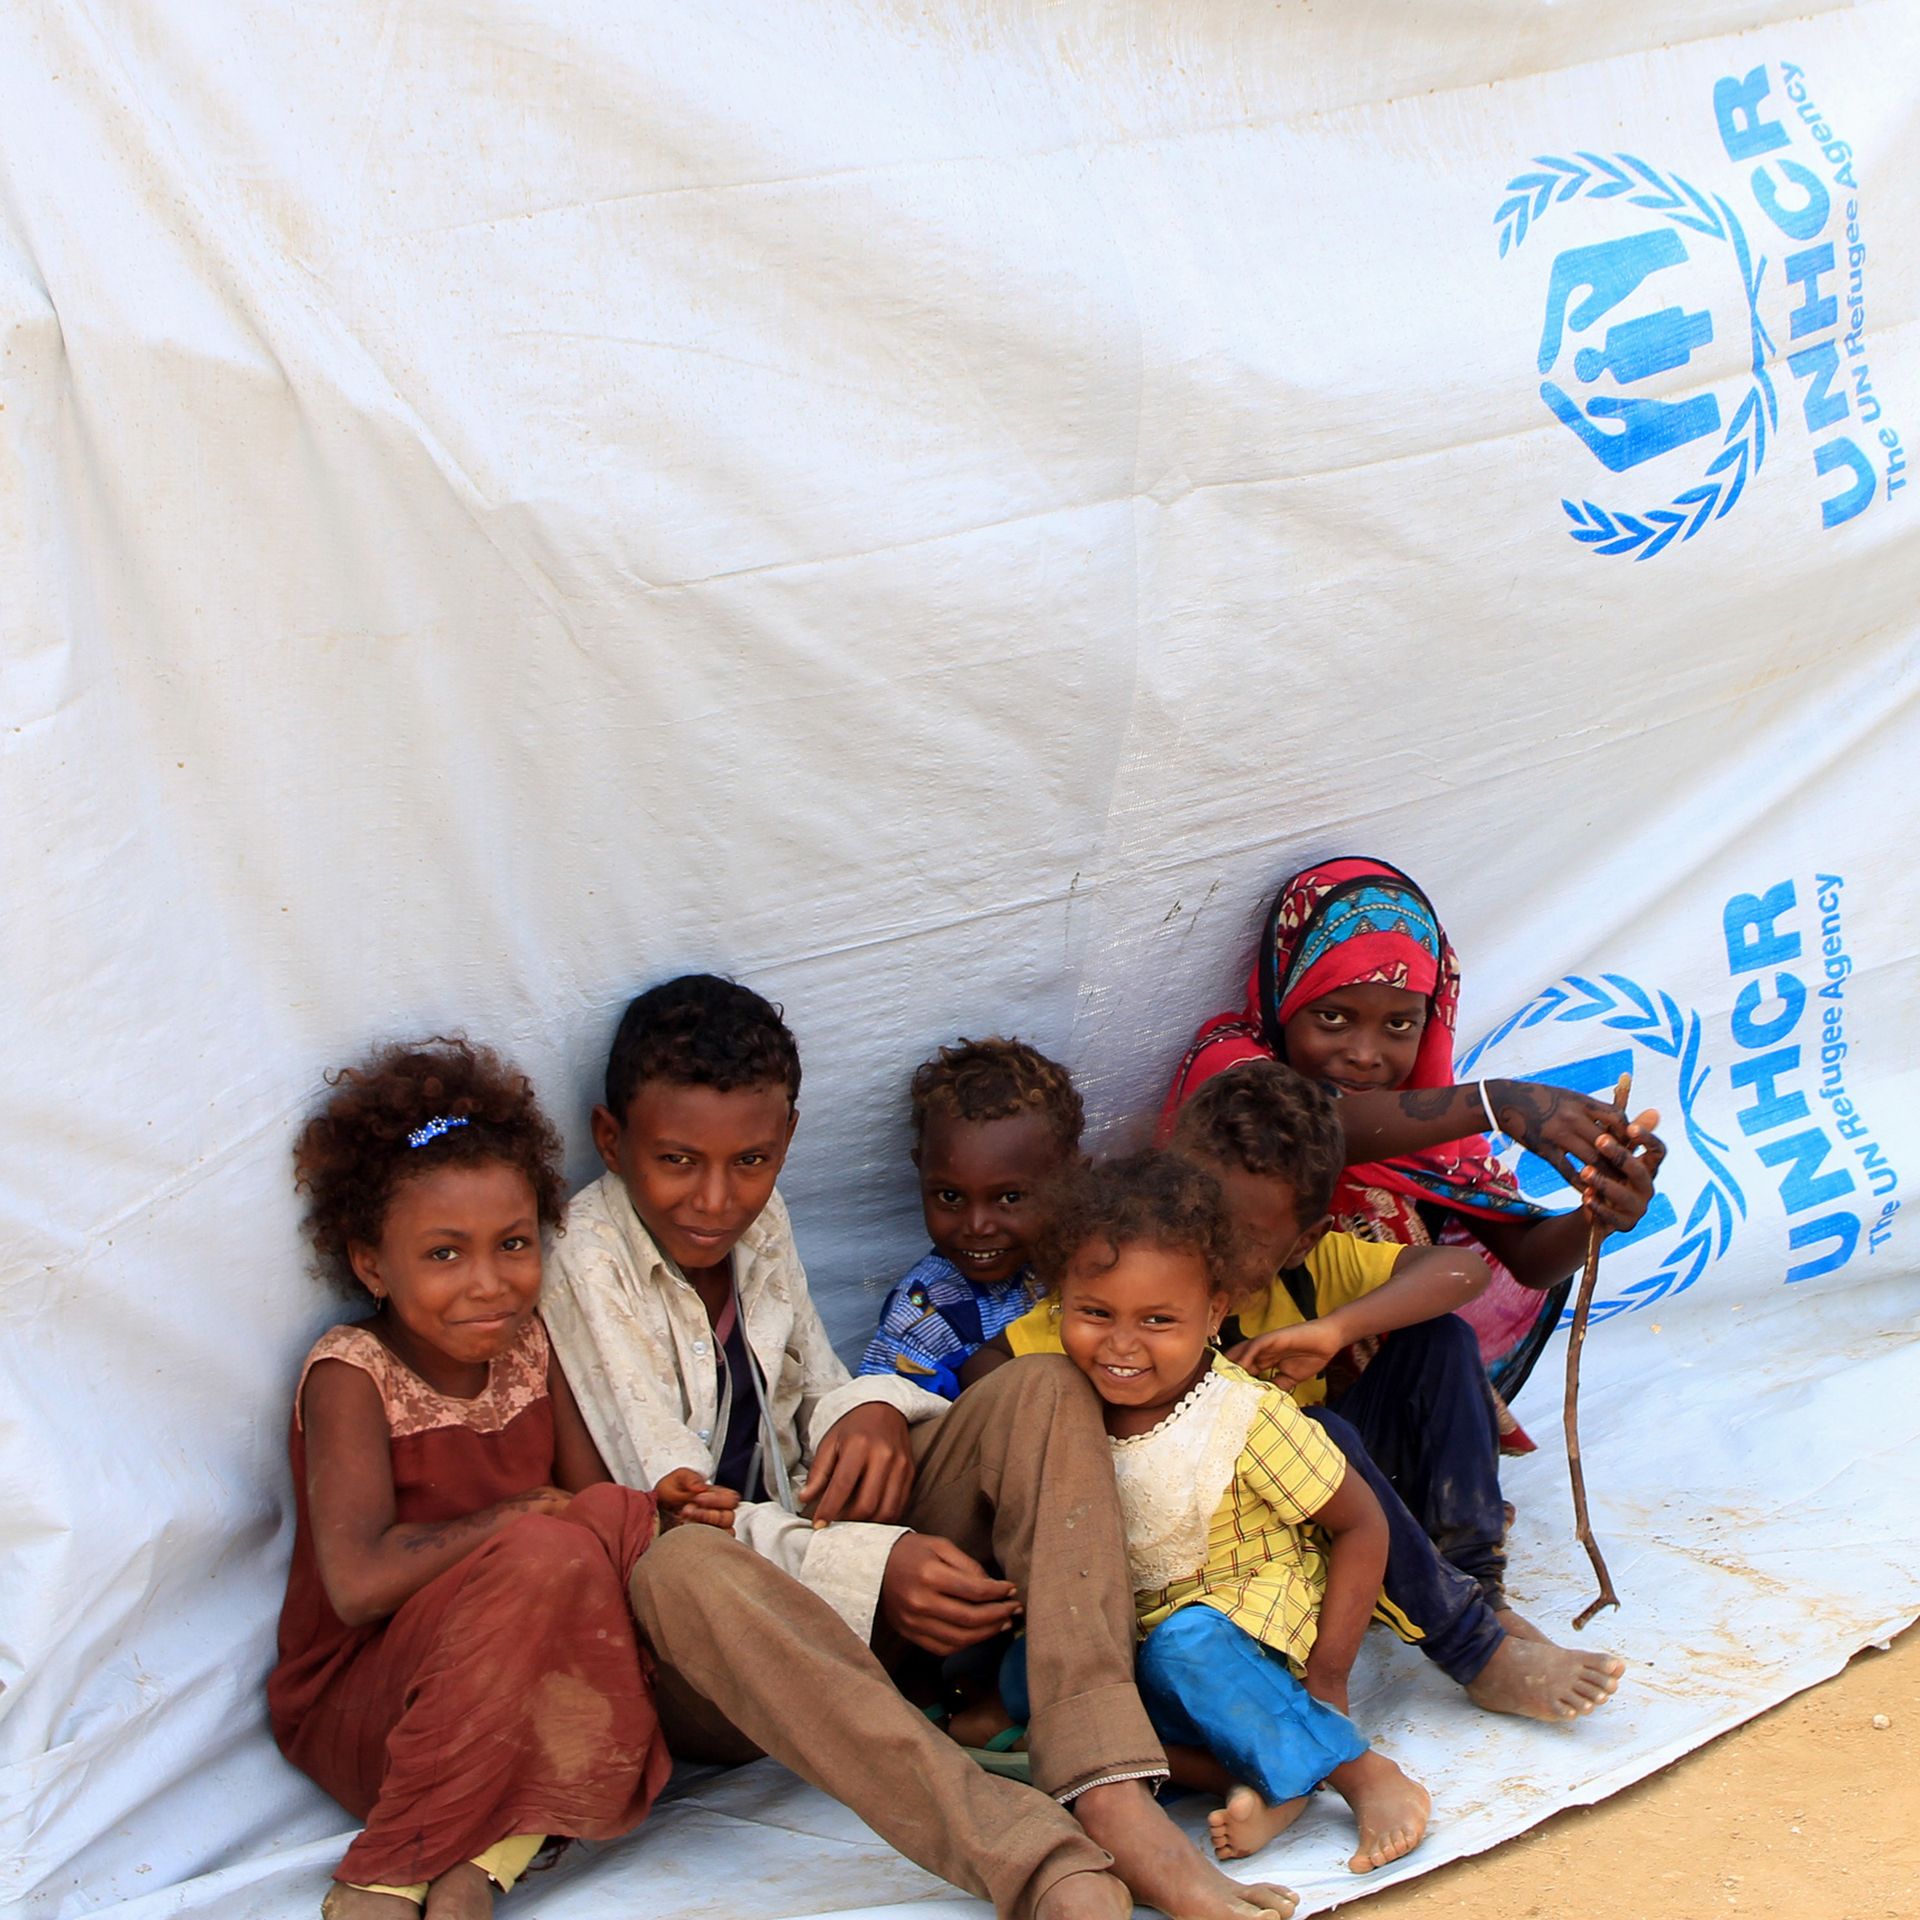 displaced Yemeni children sitting on a tarp